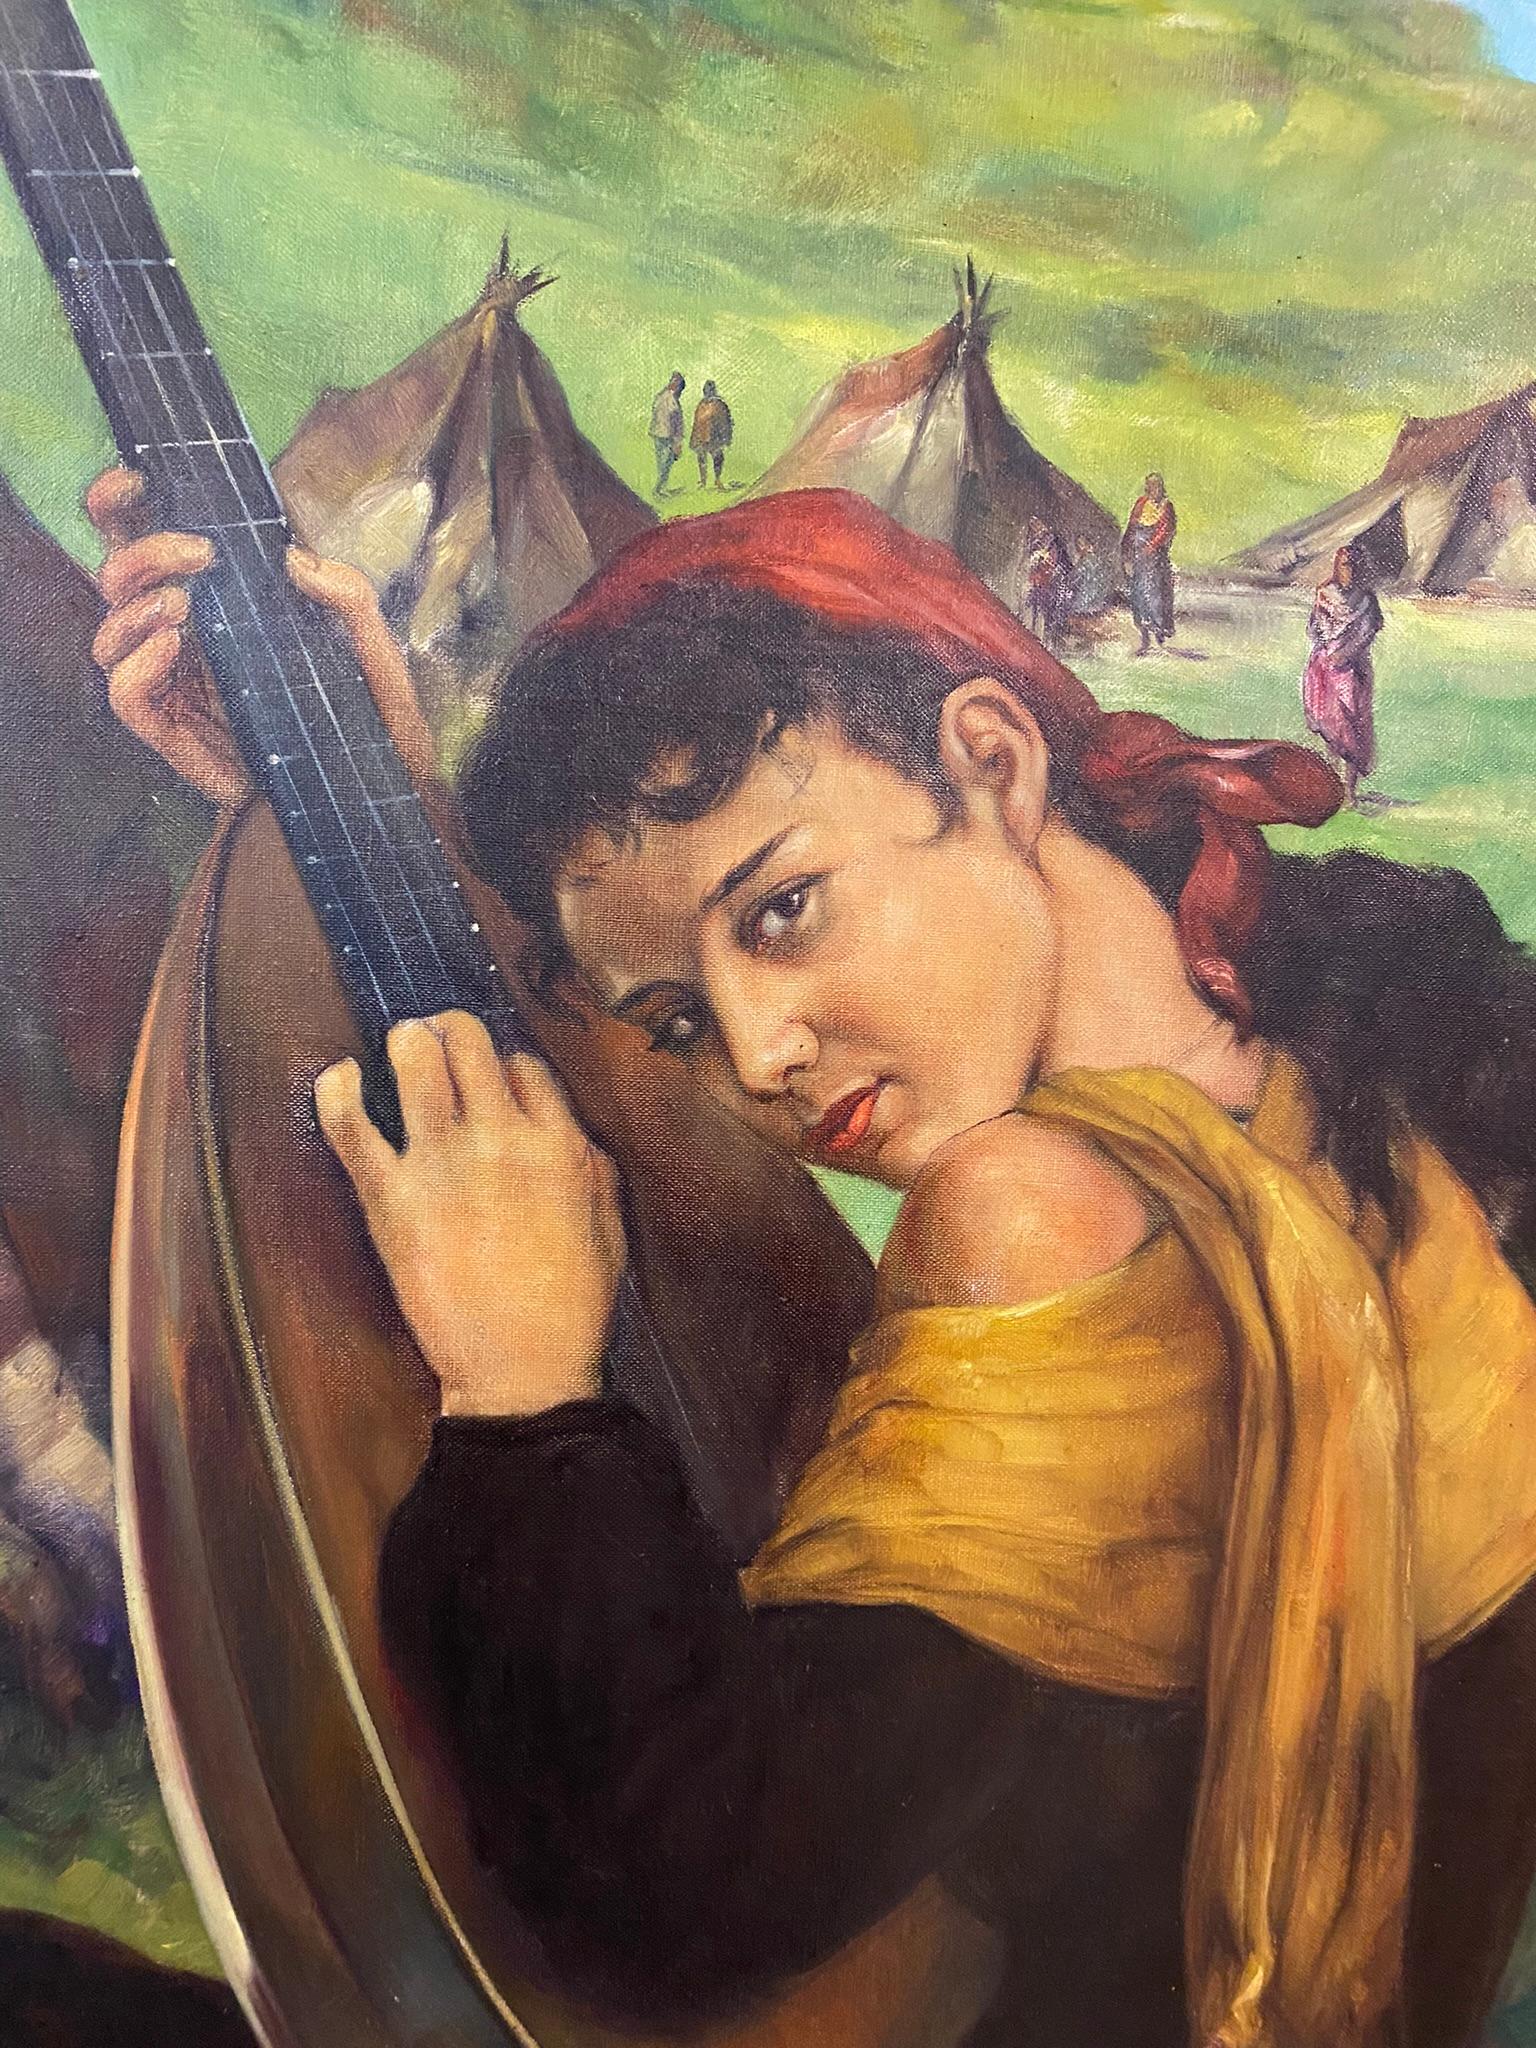 Oiled Oil on Canvas 